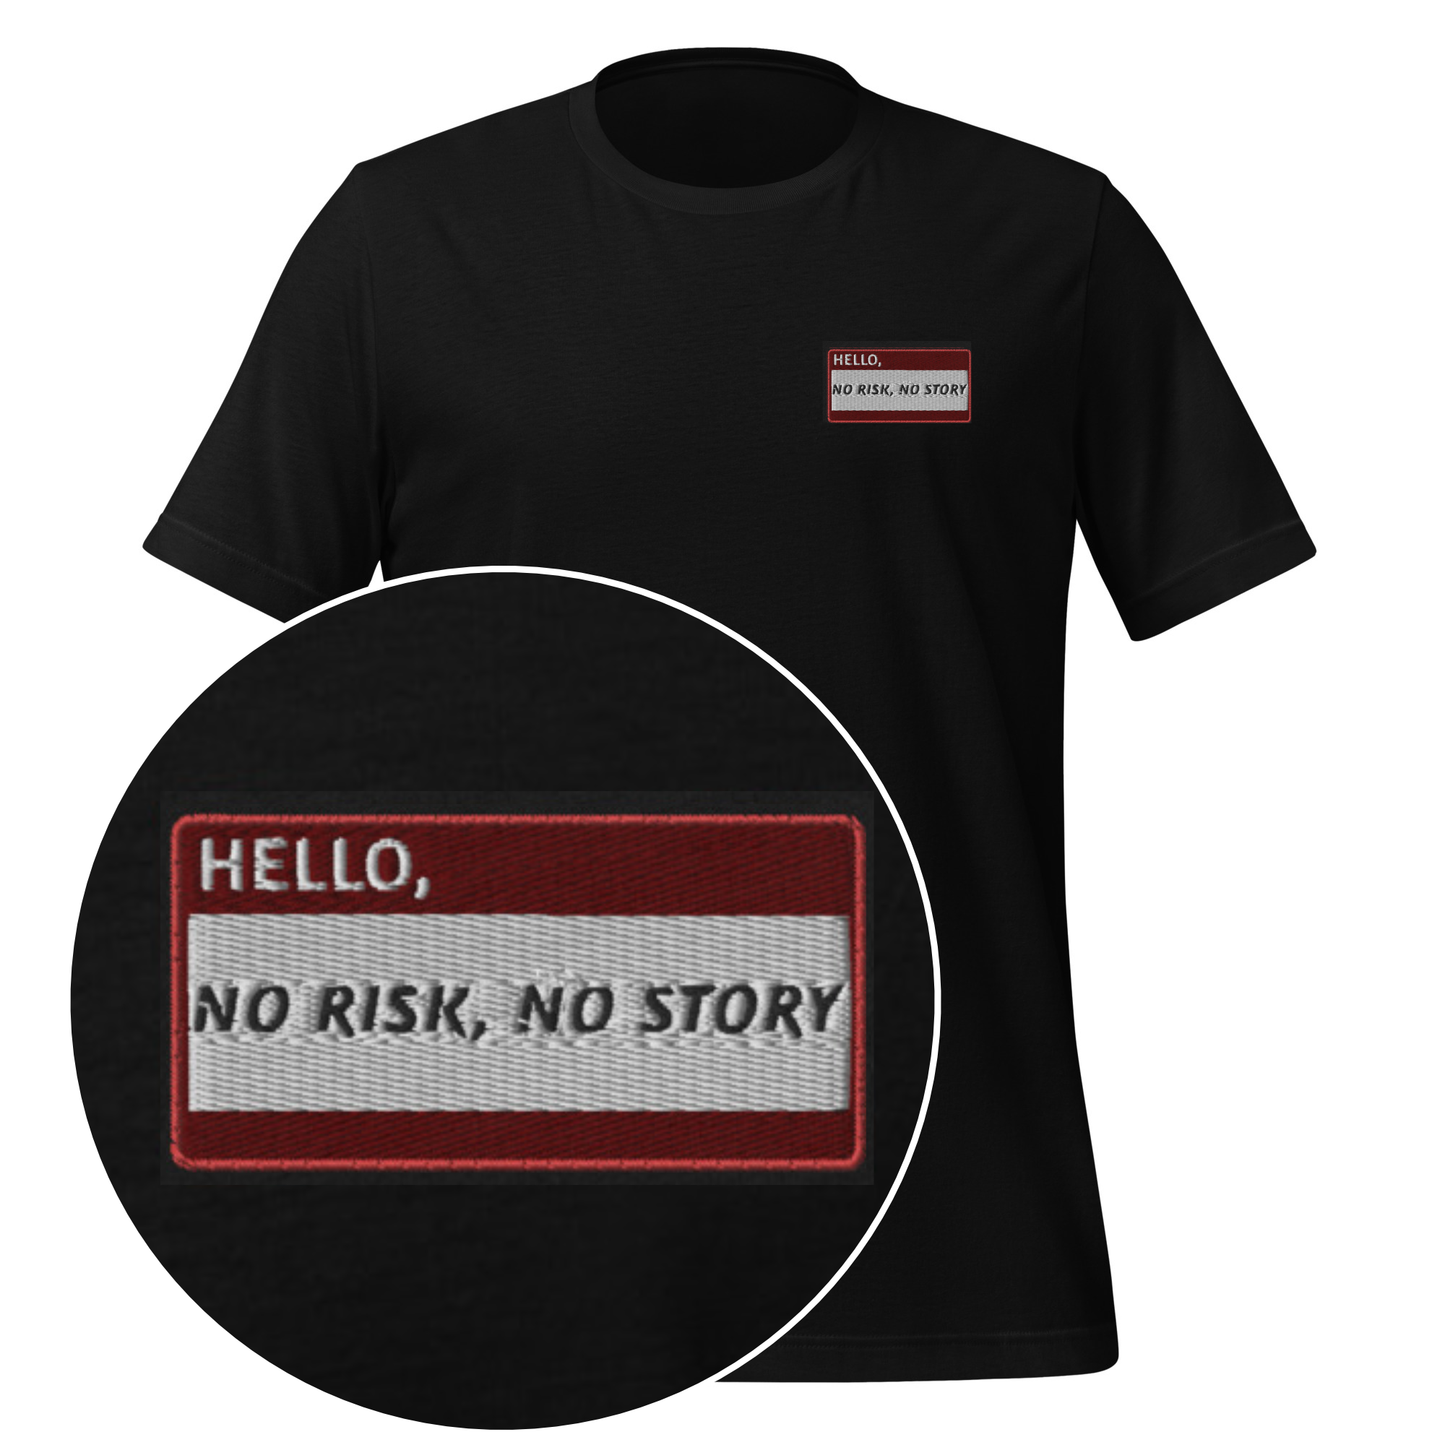 HELLO NO RISK, NO STORY - Name Tag T-Shirt